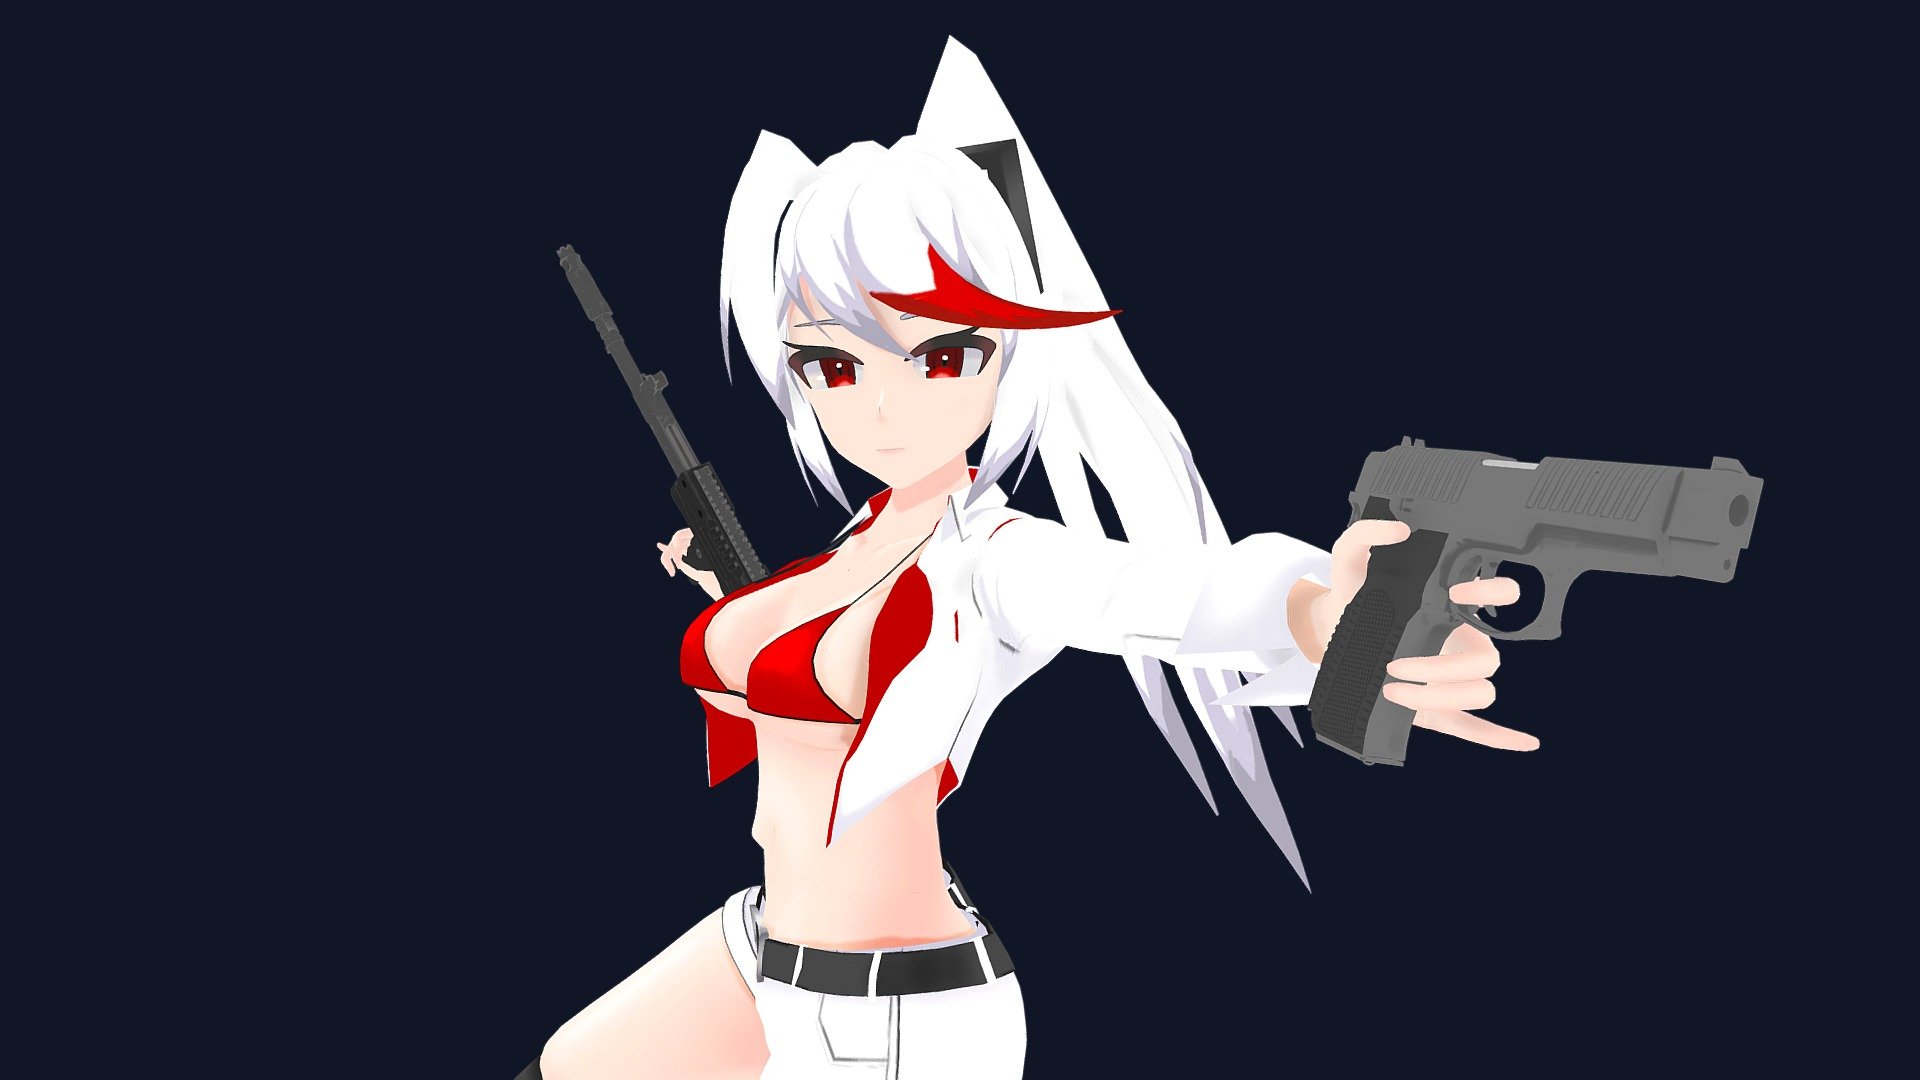 Commission for: https://twitter.com/WaifuRuns

Commission info: https://amaipchann.carrd.co/

My Twitter: https://twitter.com/Amai_9999

 - Sexy gun girl - Soboko Nintai - 3D model by phamhaphuong23399 3d model